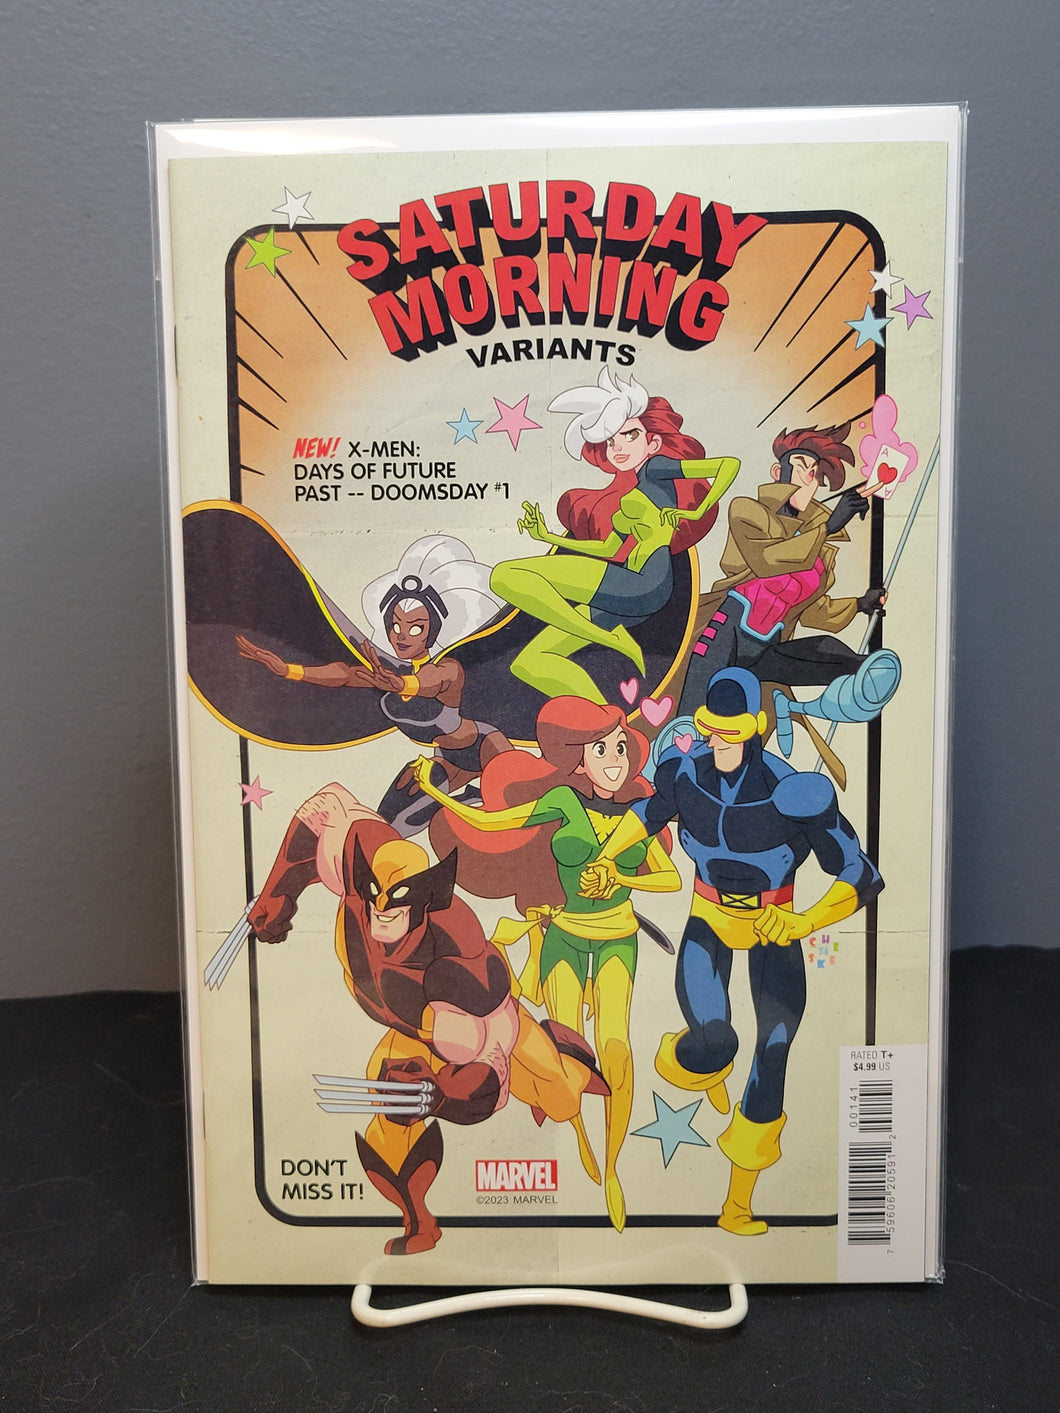 X-Men Days Of Future Past Doomsday #1 Saturday Morning Variant